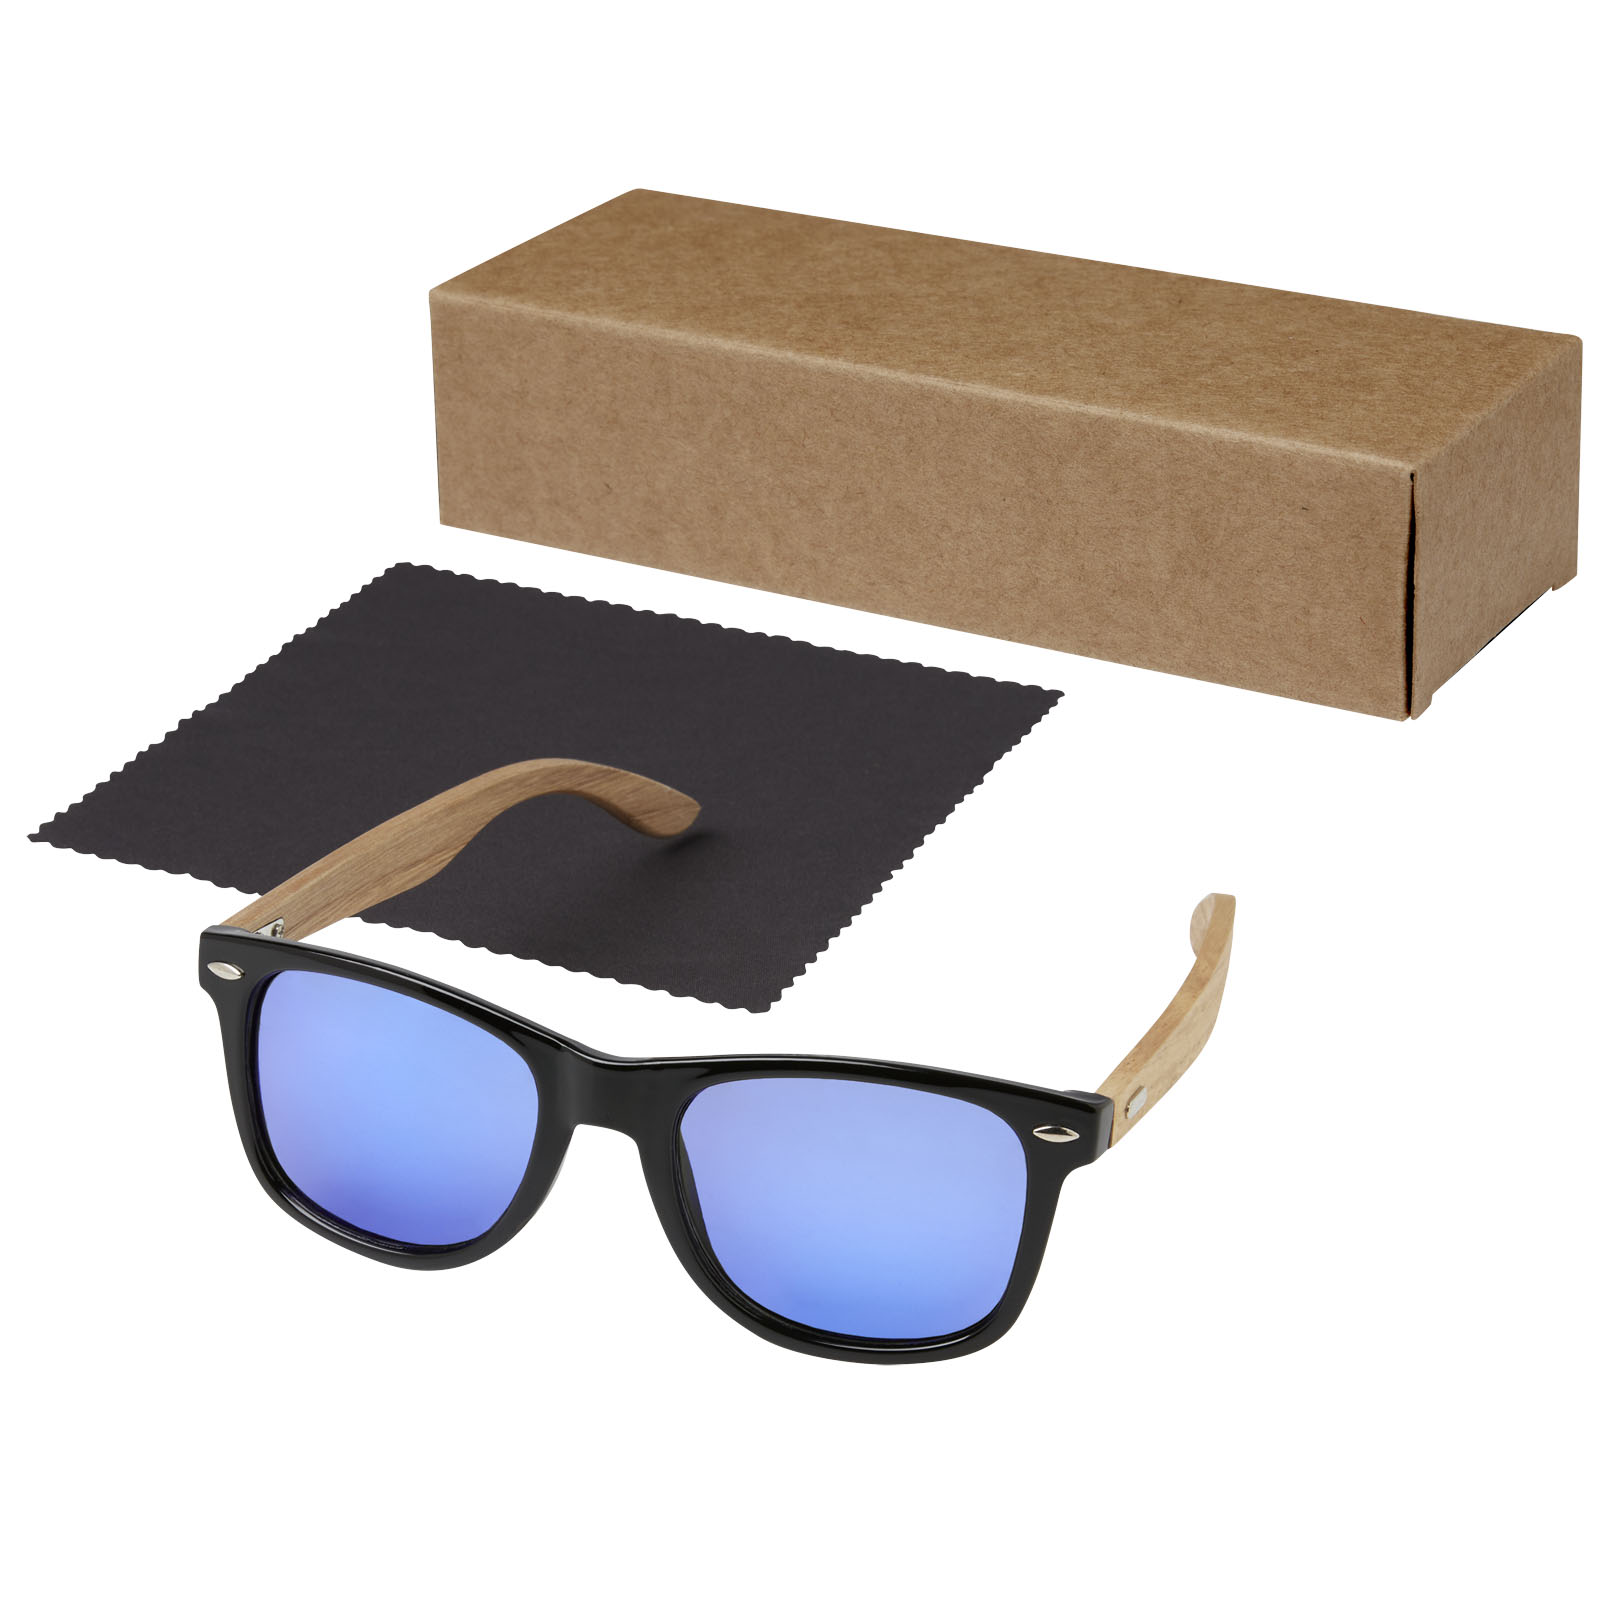 Advertising Sunglasses - Hiru rPET/wood mirrored polarized sunglasses in gift box - 4